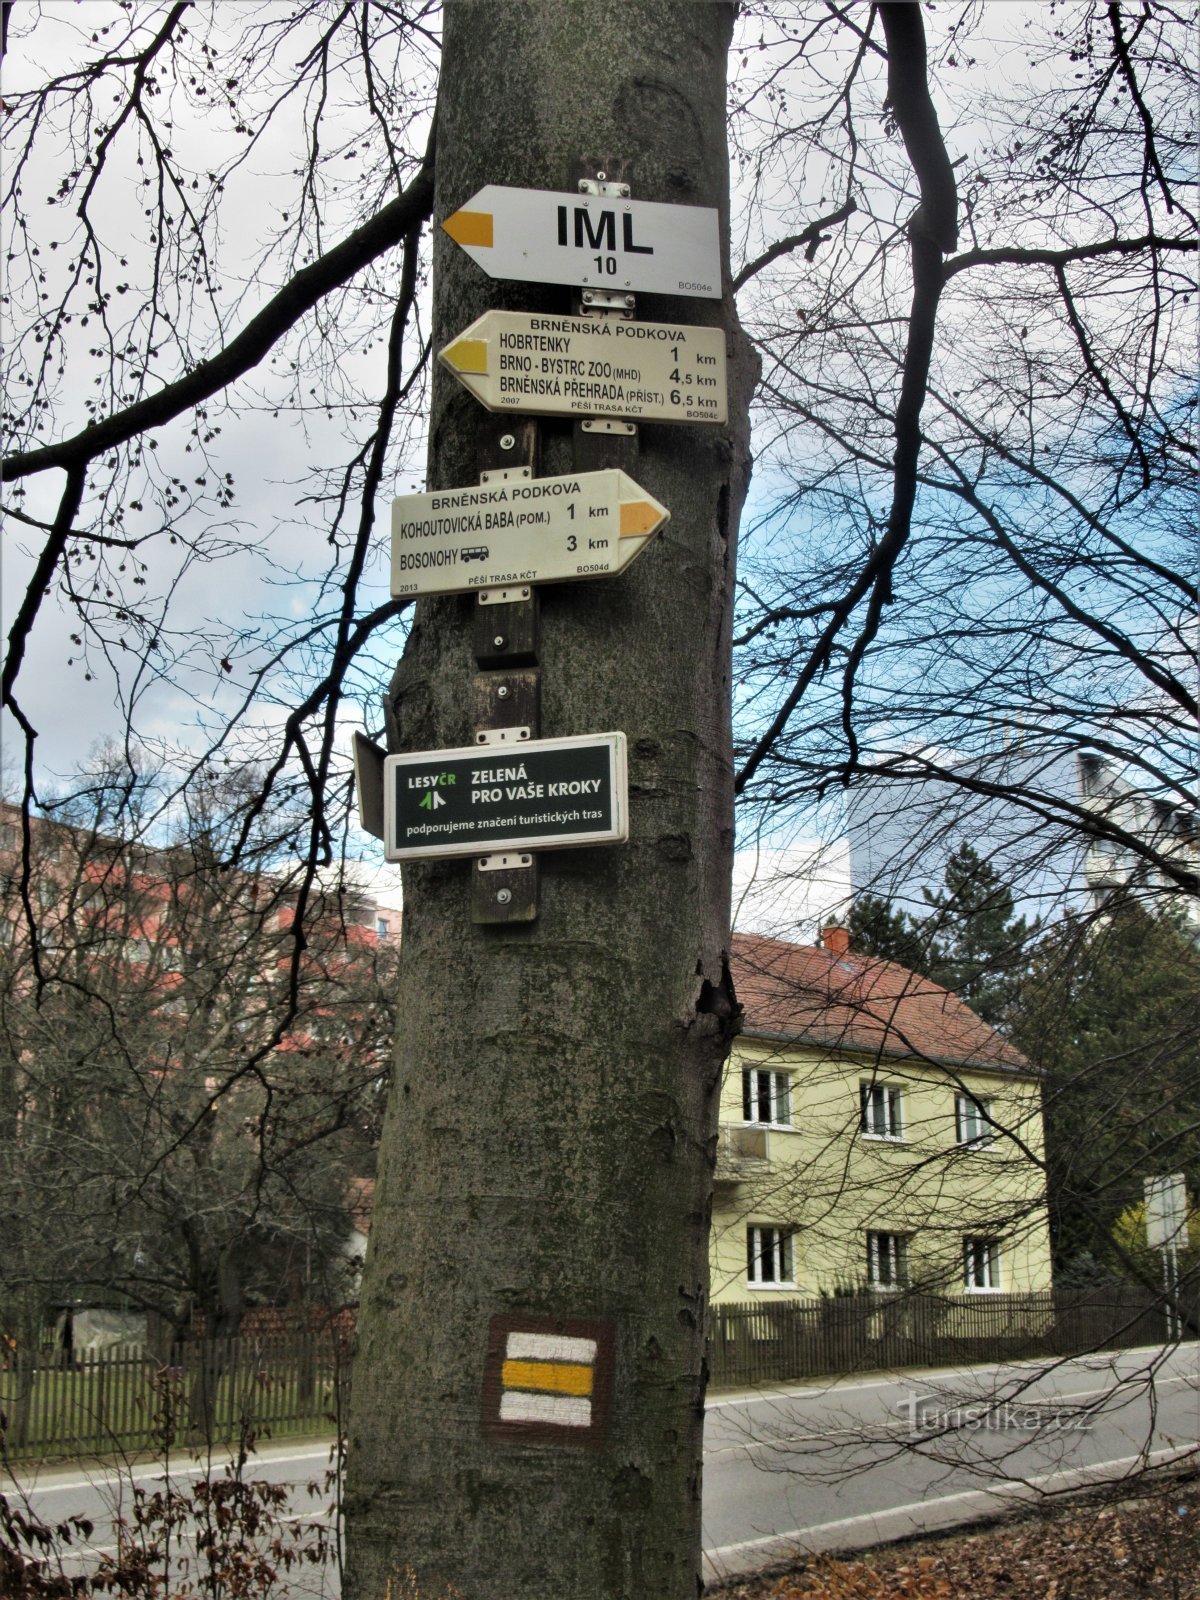 Tourist crossroads Kohoutovice-hájenka